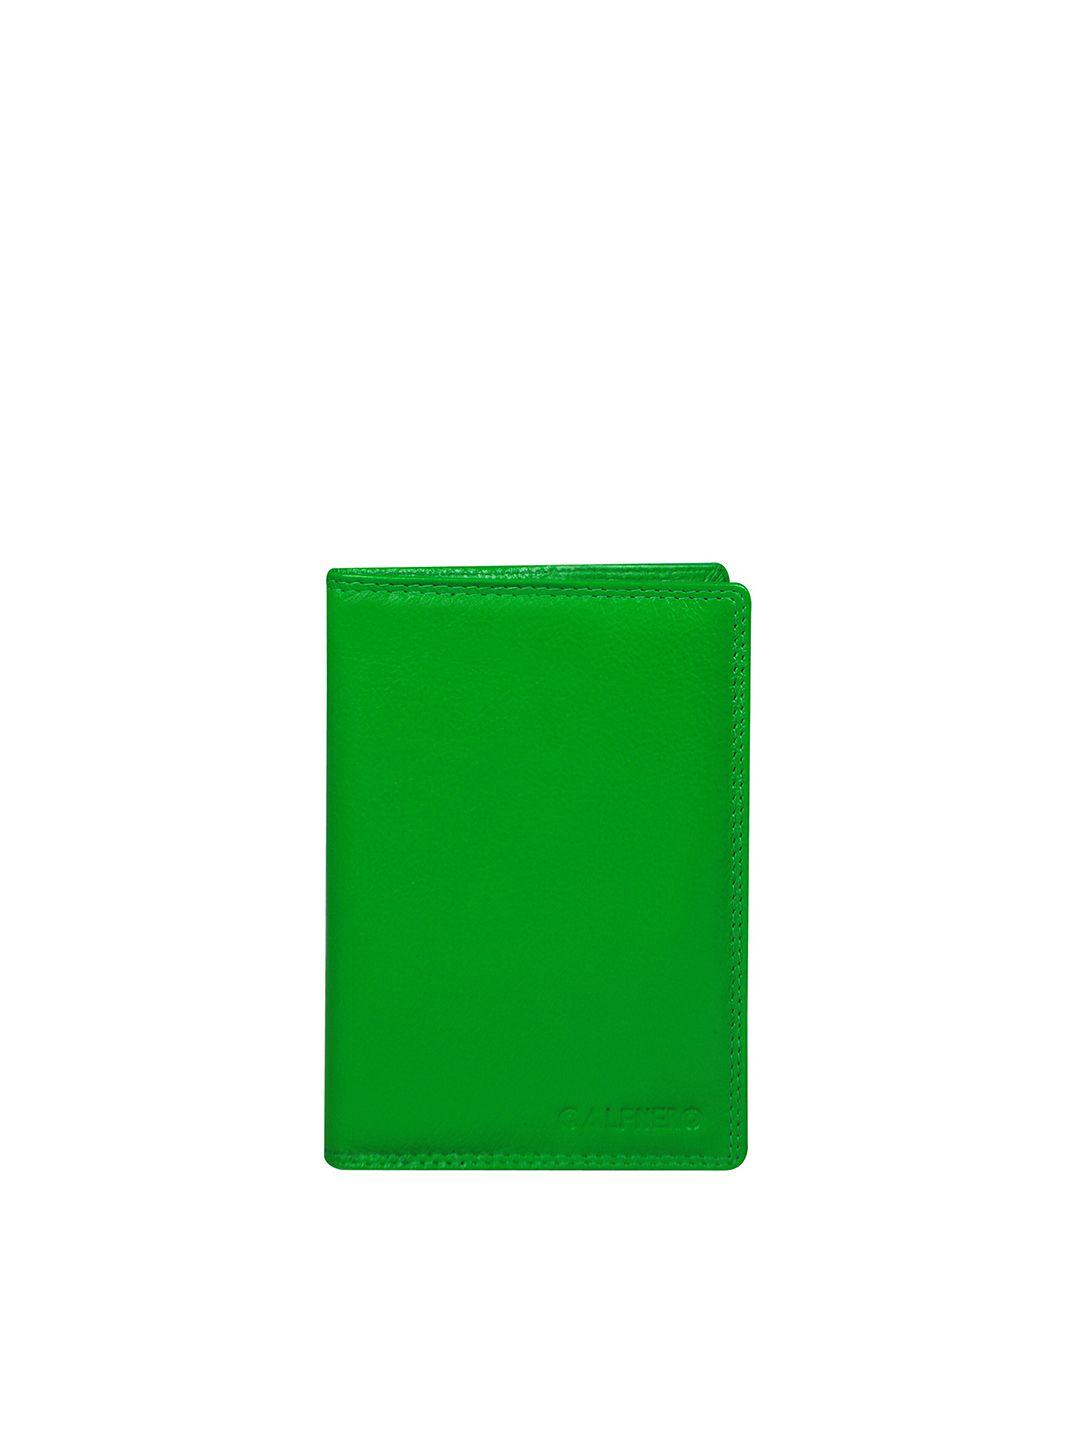 calfnero unisex green leather passport holder with passport holder